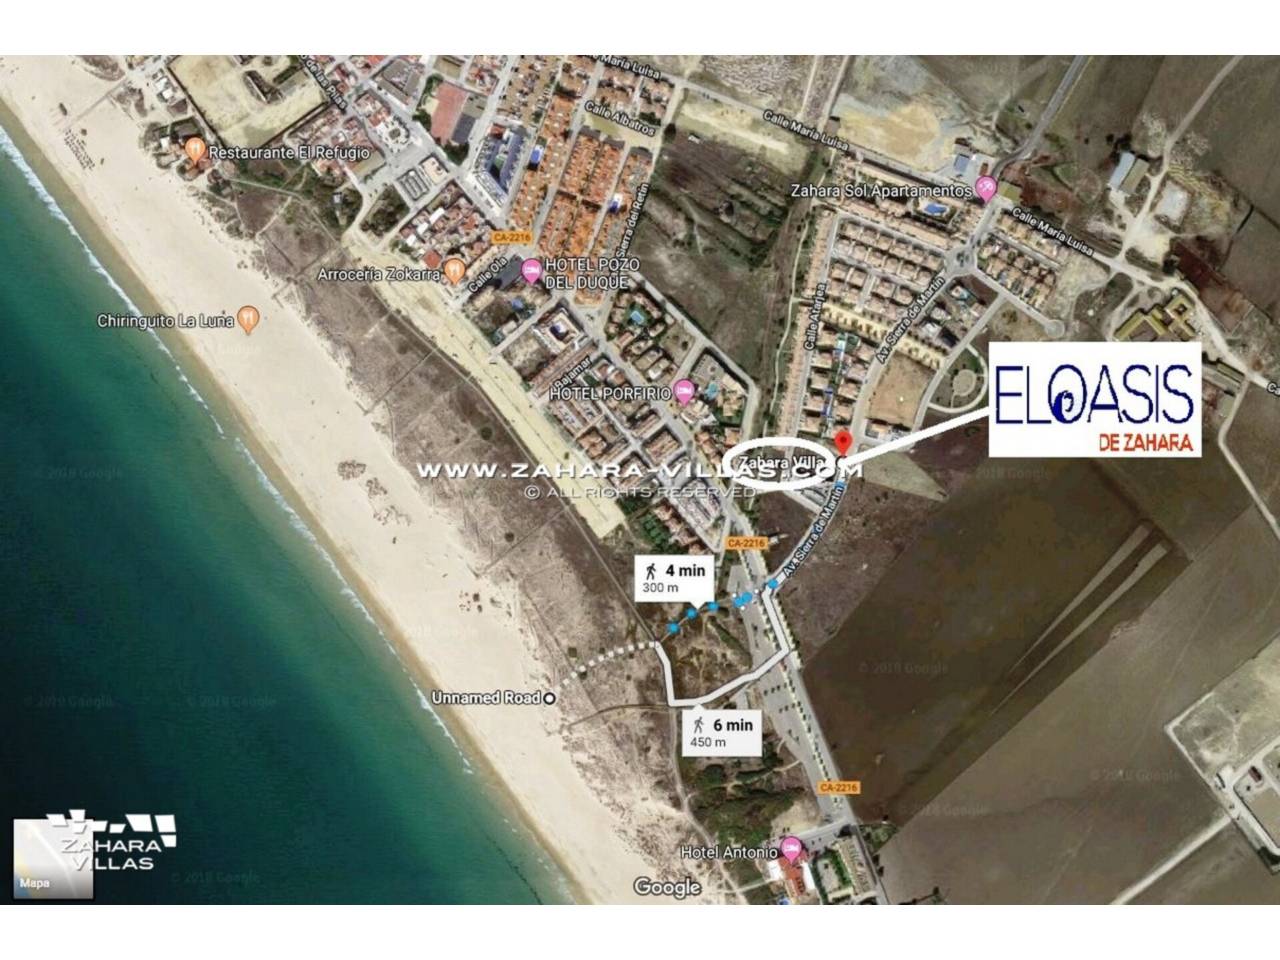 Imagen 42 de NEW DEVELOPMENT COMPLETED "EL OASIS DE ZAHARA" 15 SEMI-DETACHED HOUSES BY THE SEA